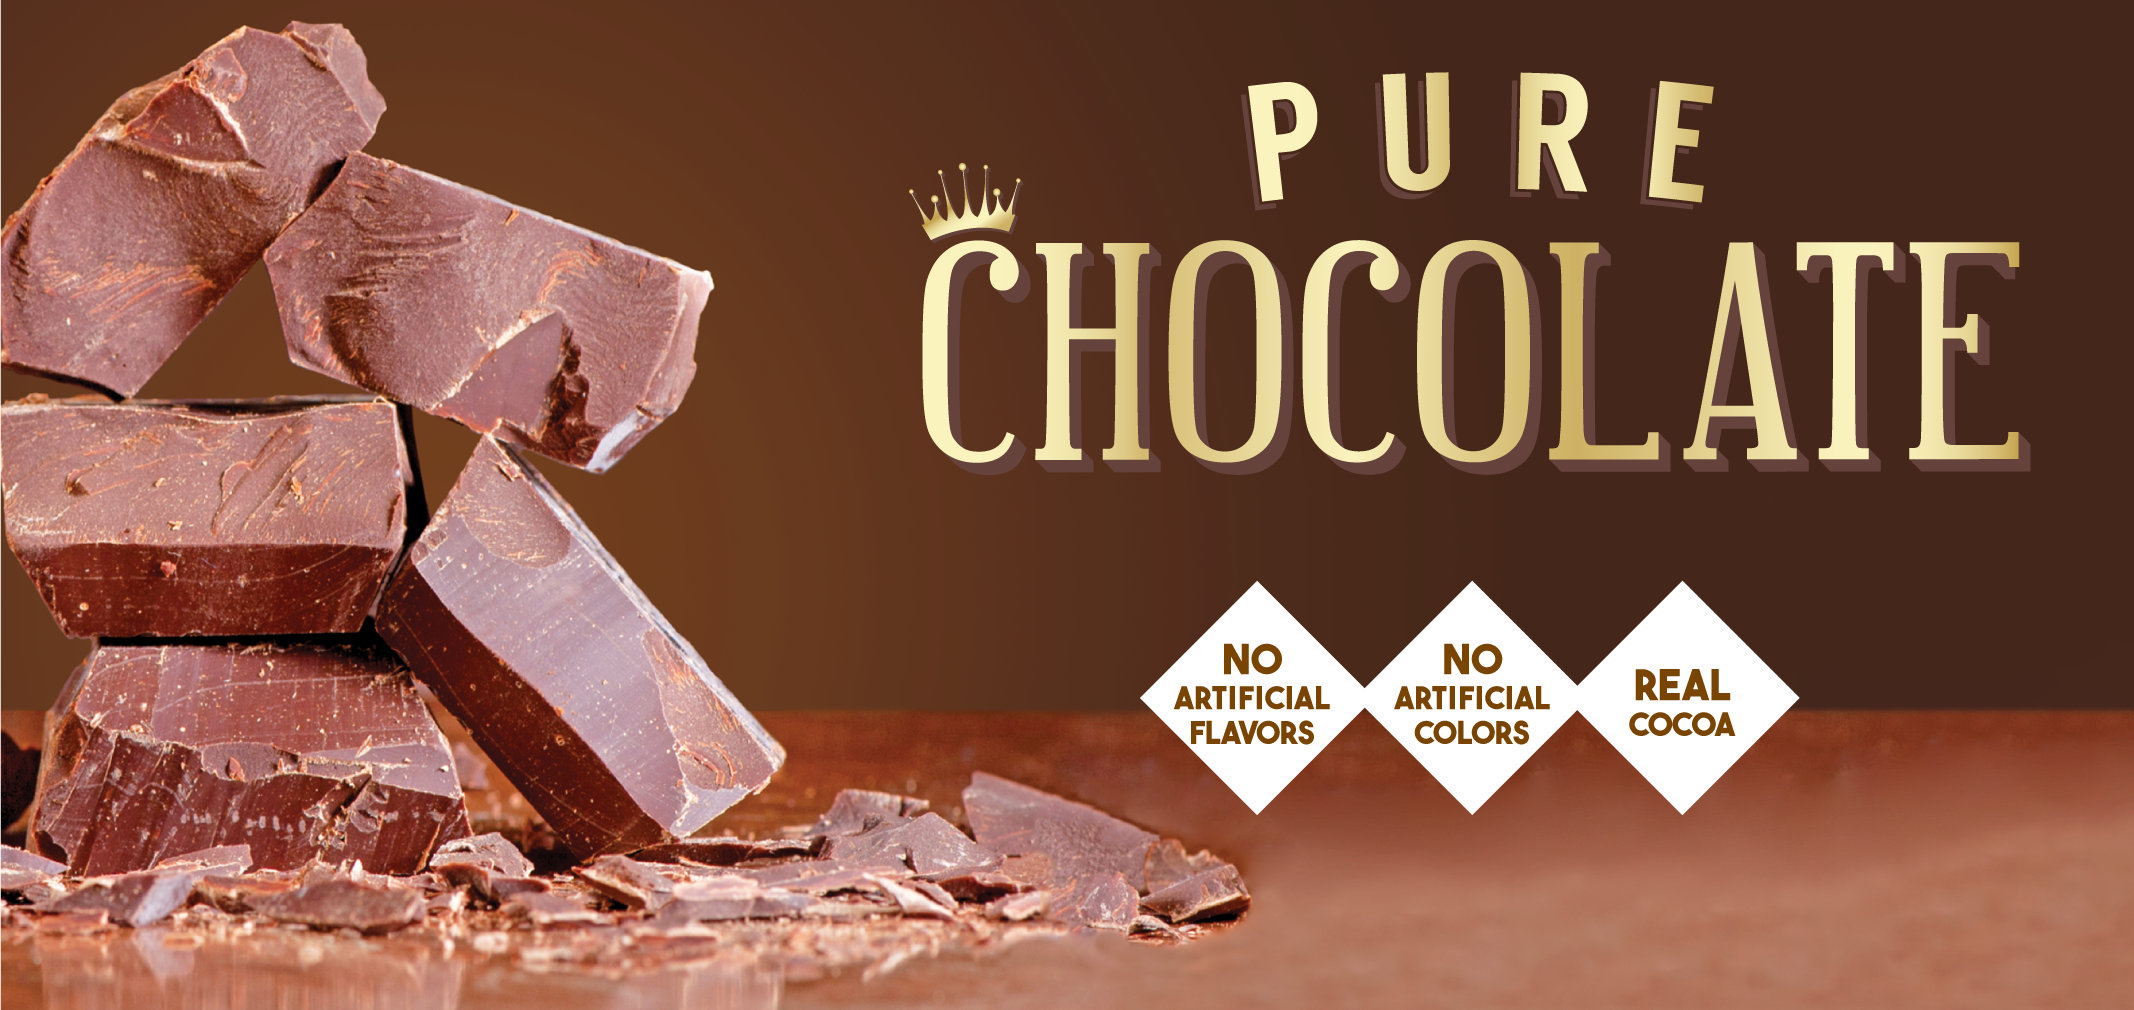 pure chocolate label image